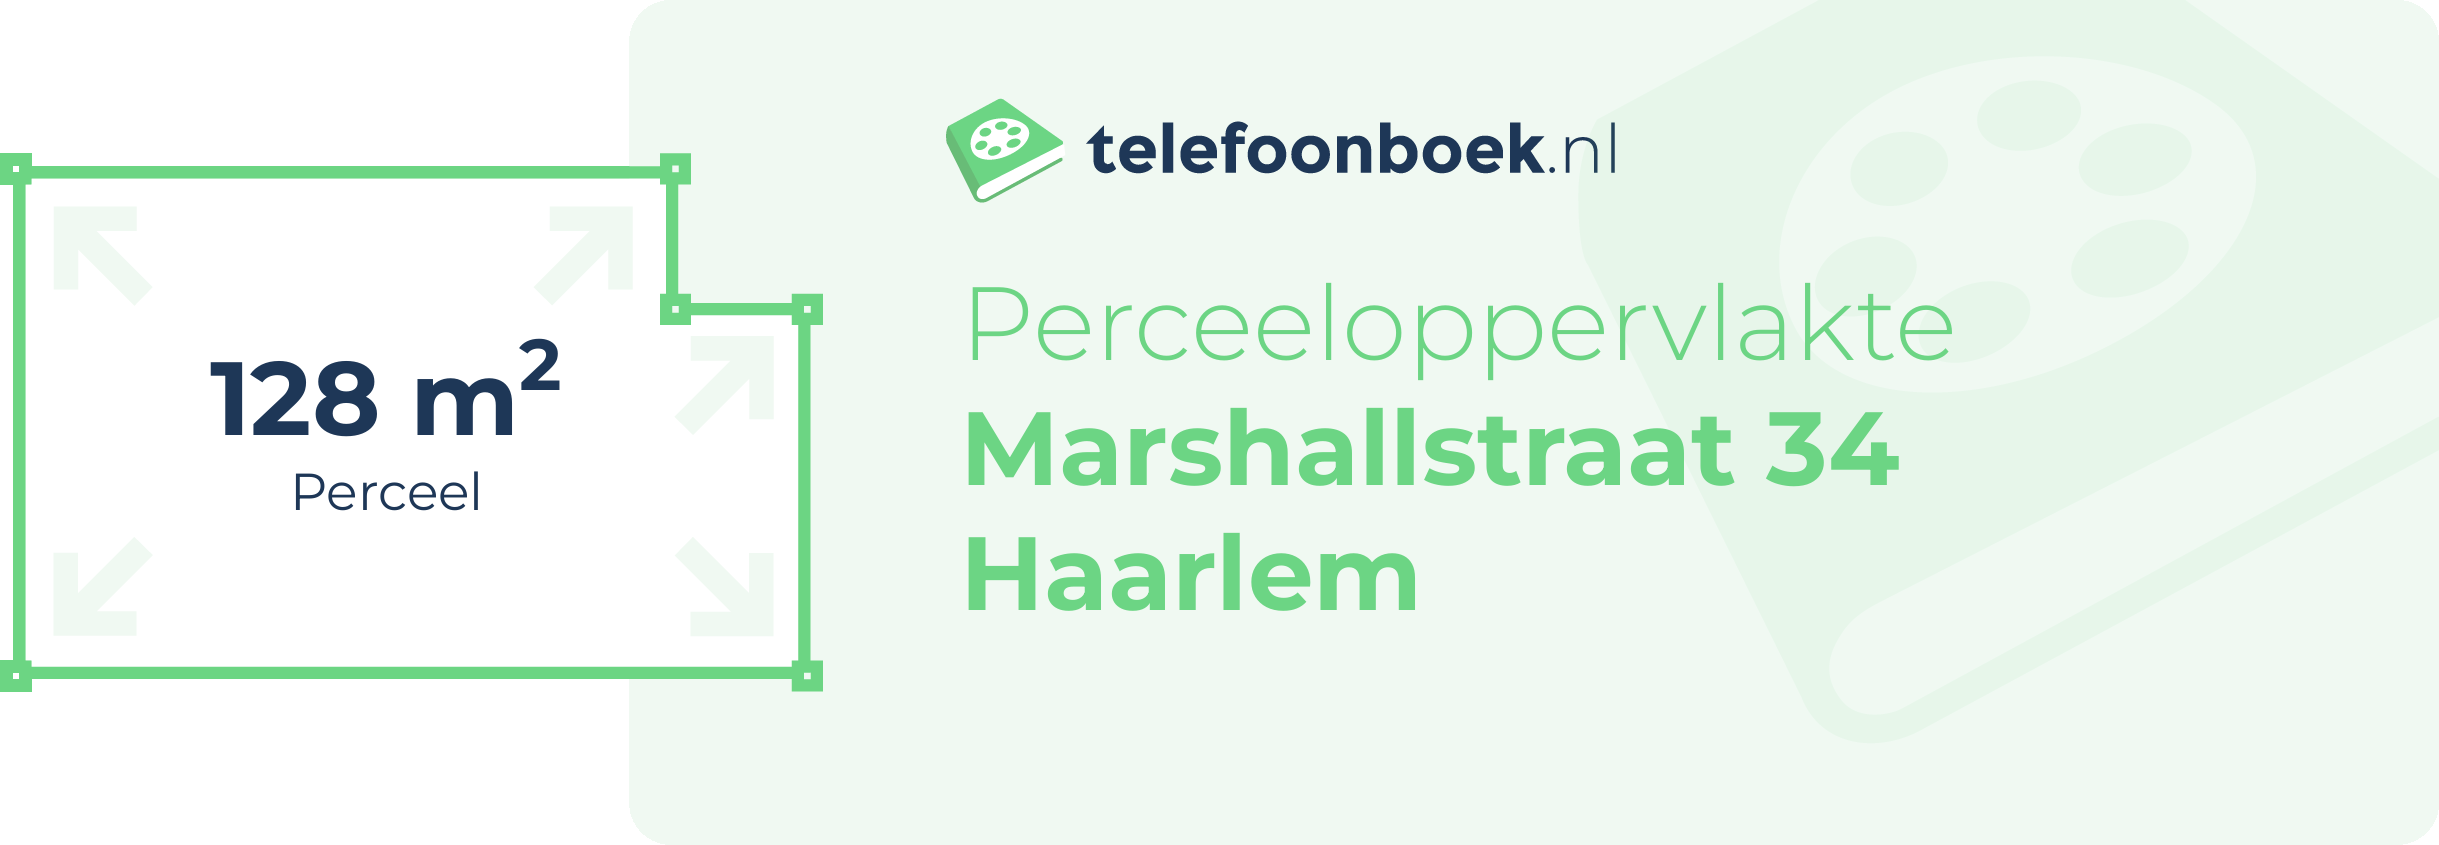 Perceeloppervlakte Marshallstraat 34 Haarlem